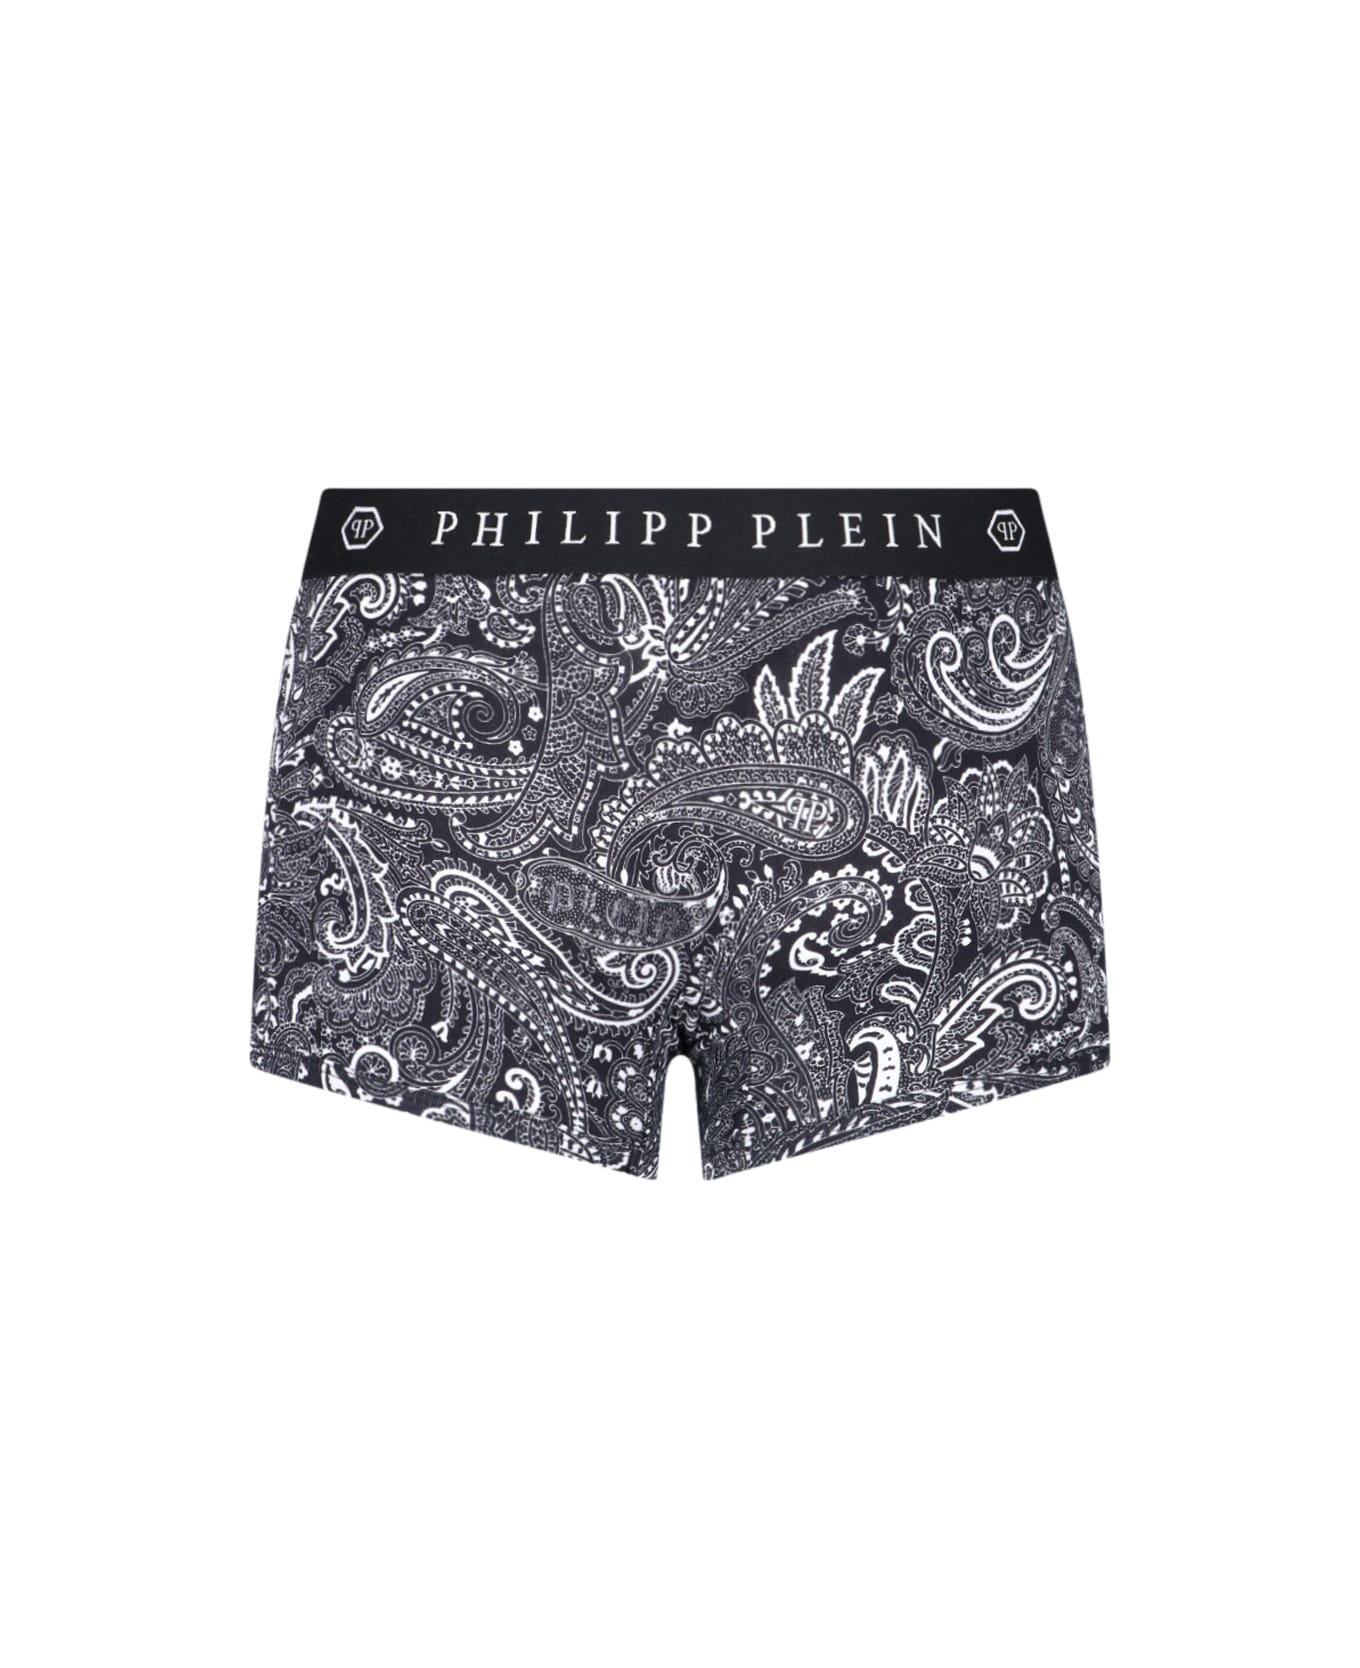 Philipp Plein "briefs" Boxers - White